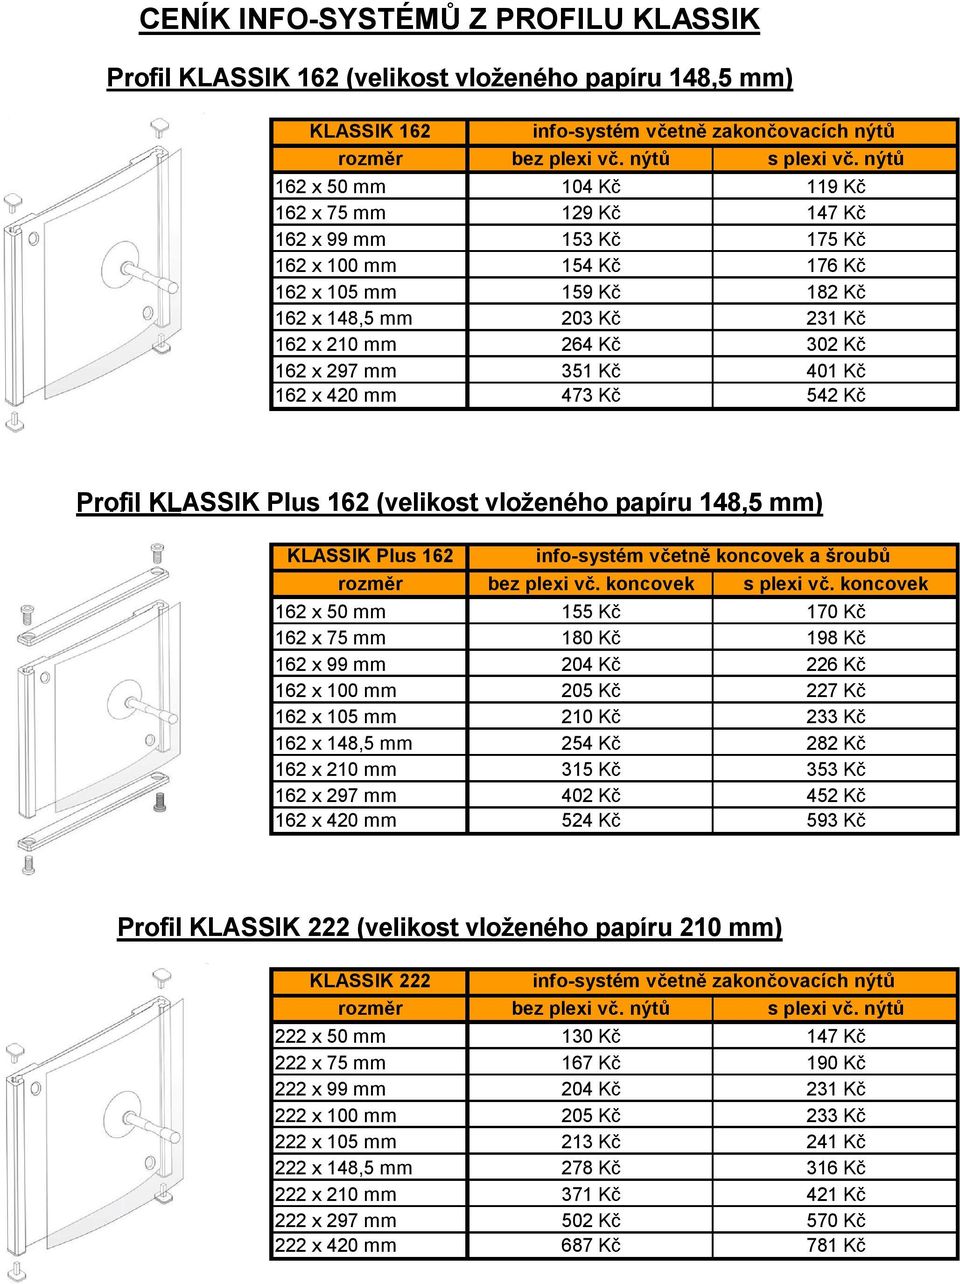 x420 mm 473 K 542 K Profil KLASSIK Plus 162 (velikost vloženého papíru 148,5 mm) KLASSIK Plus 162 info-systém v etn koncovek ašroub rozm r bez plexi v.koncovek s plexi v.